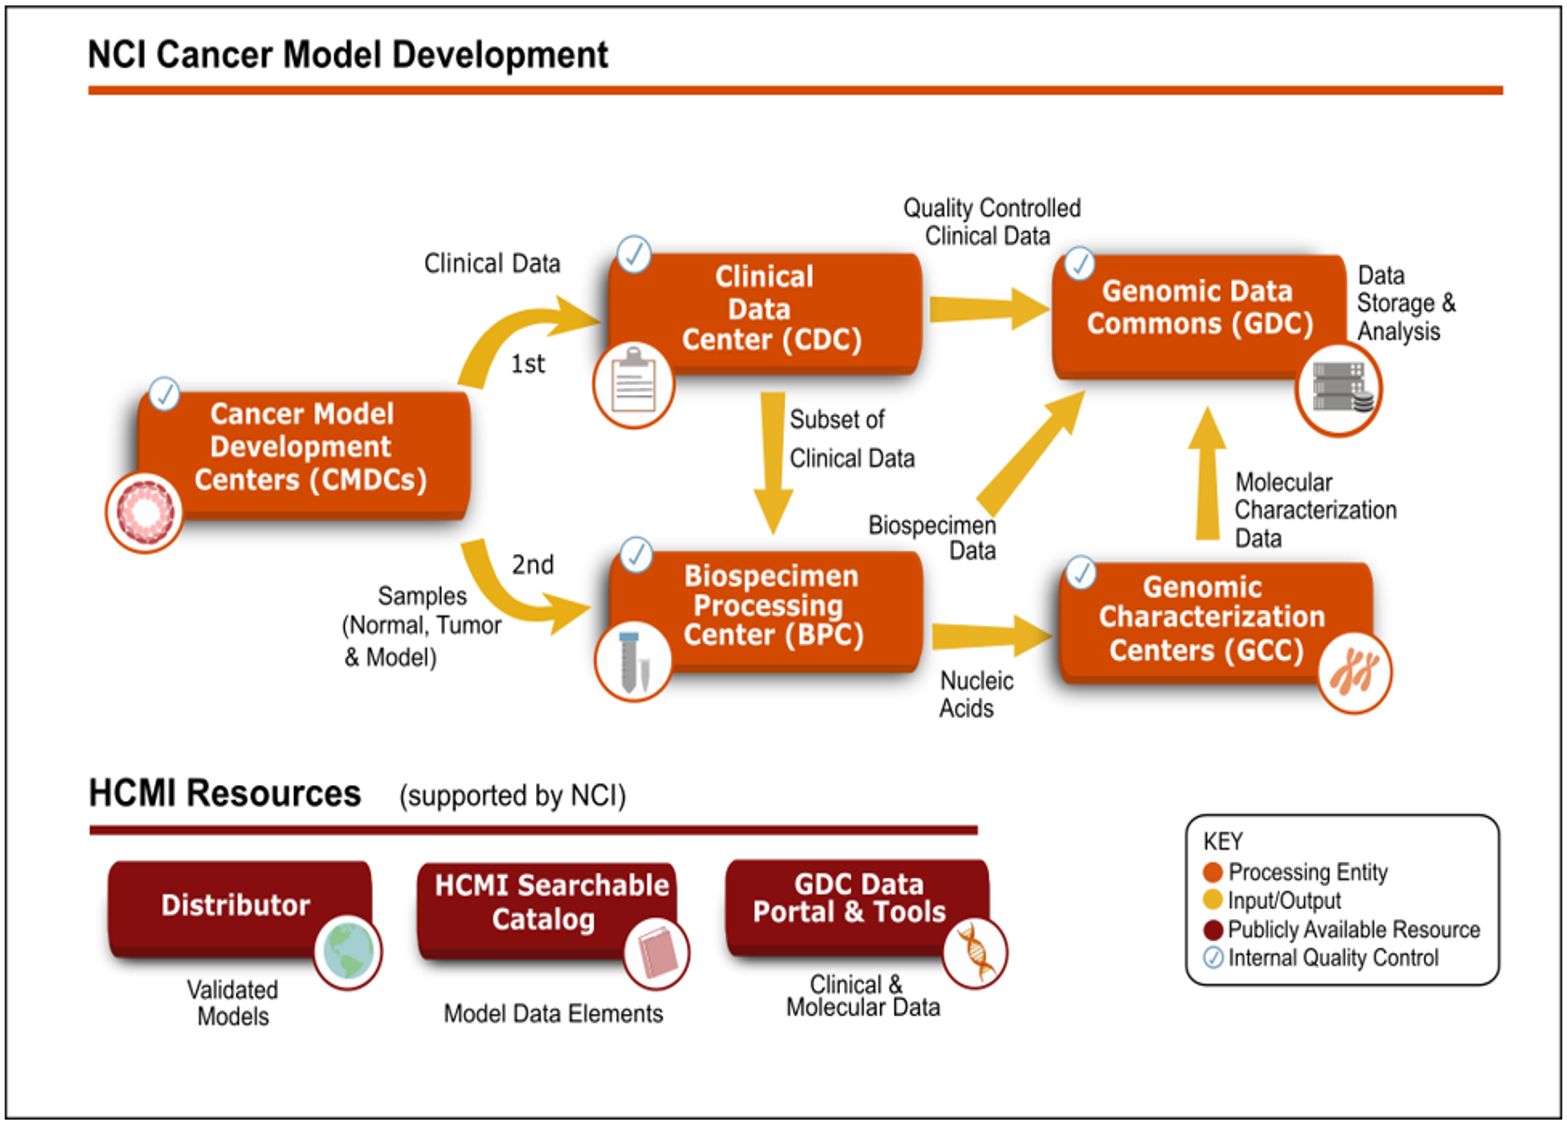 NCI Cancer Model Development Flowchart